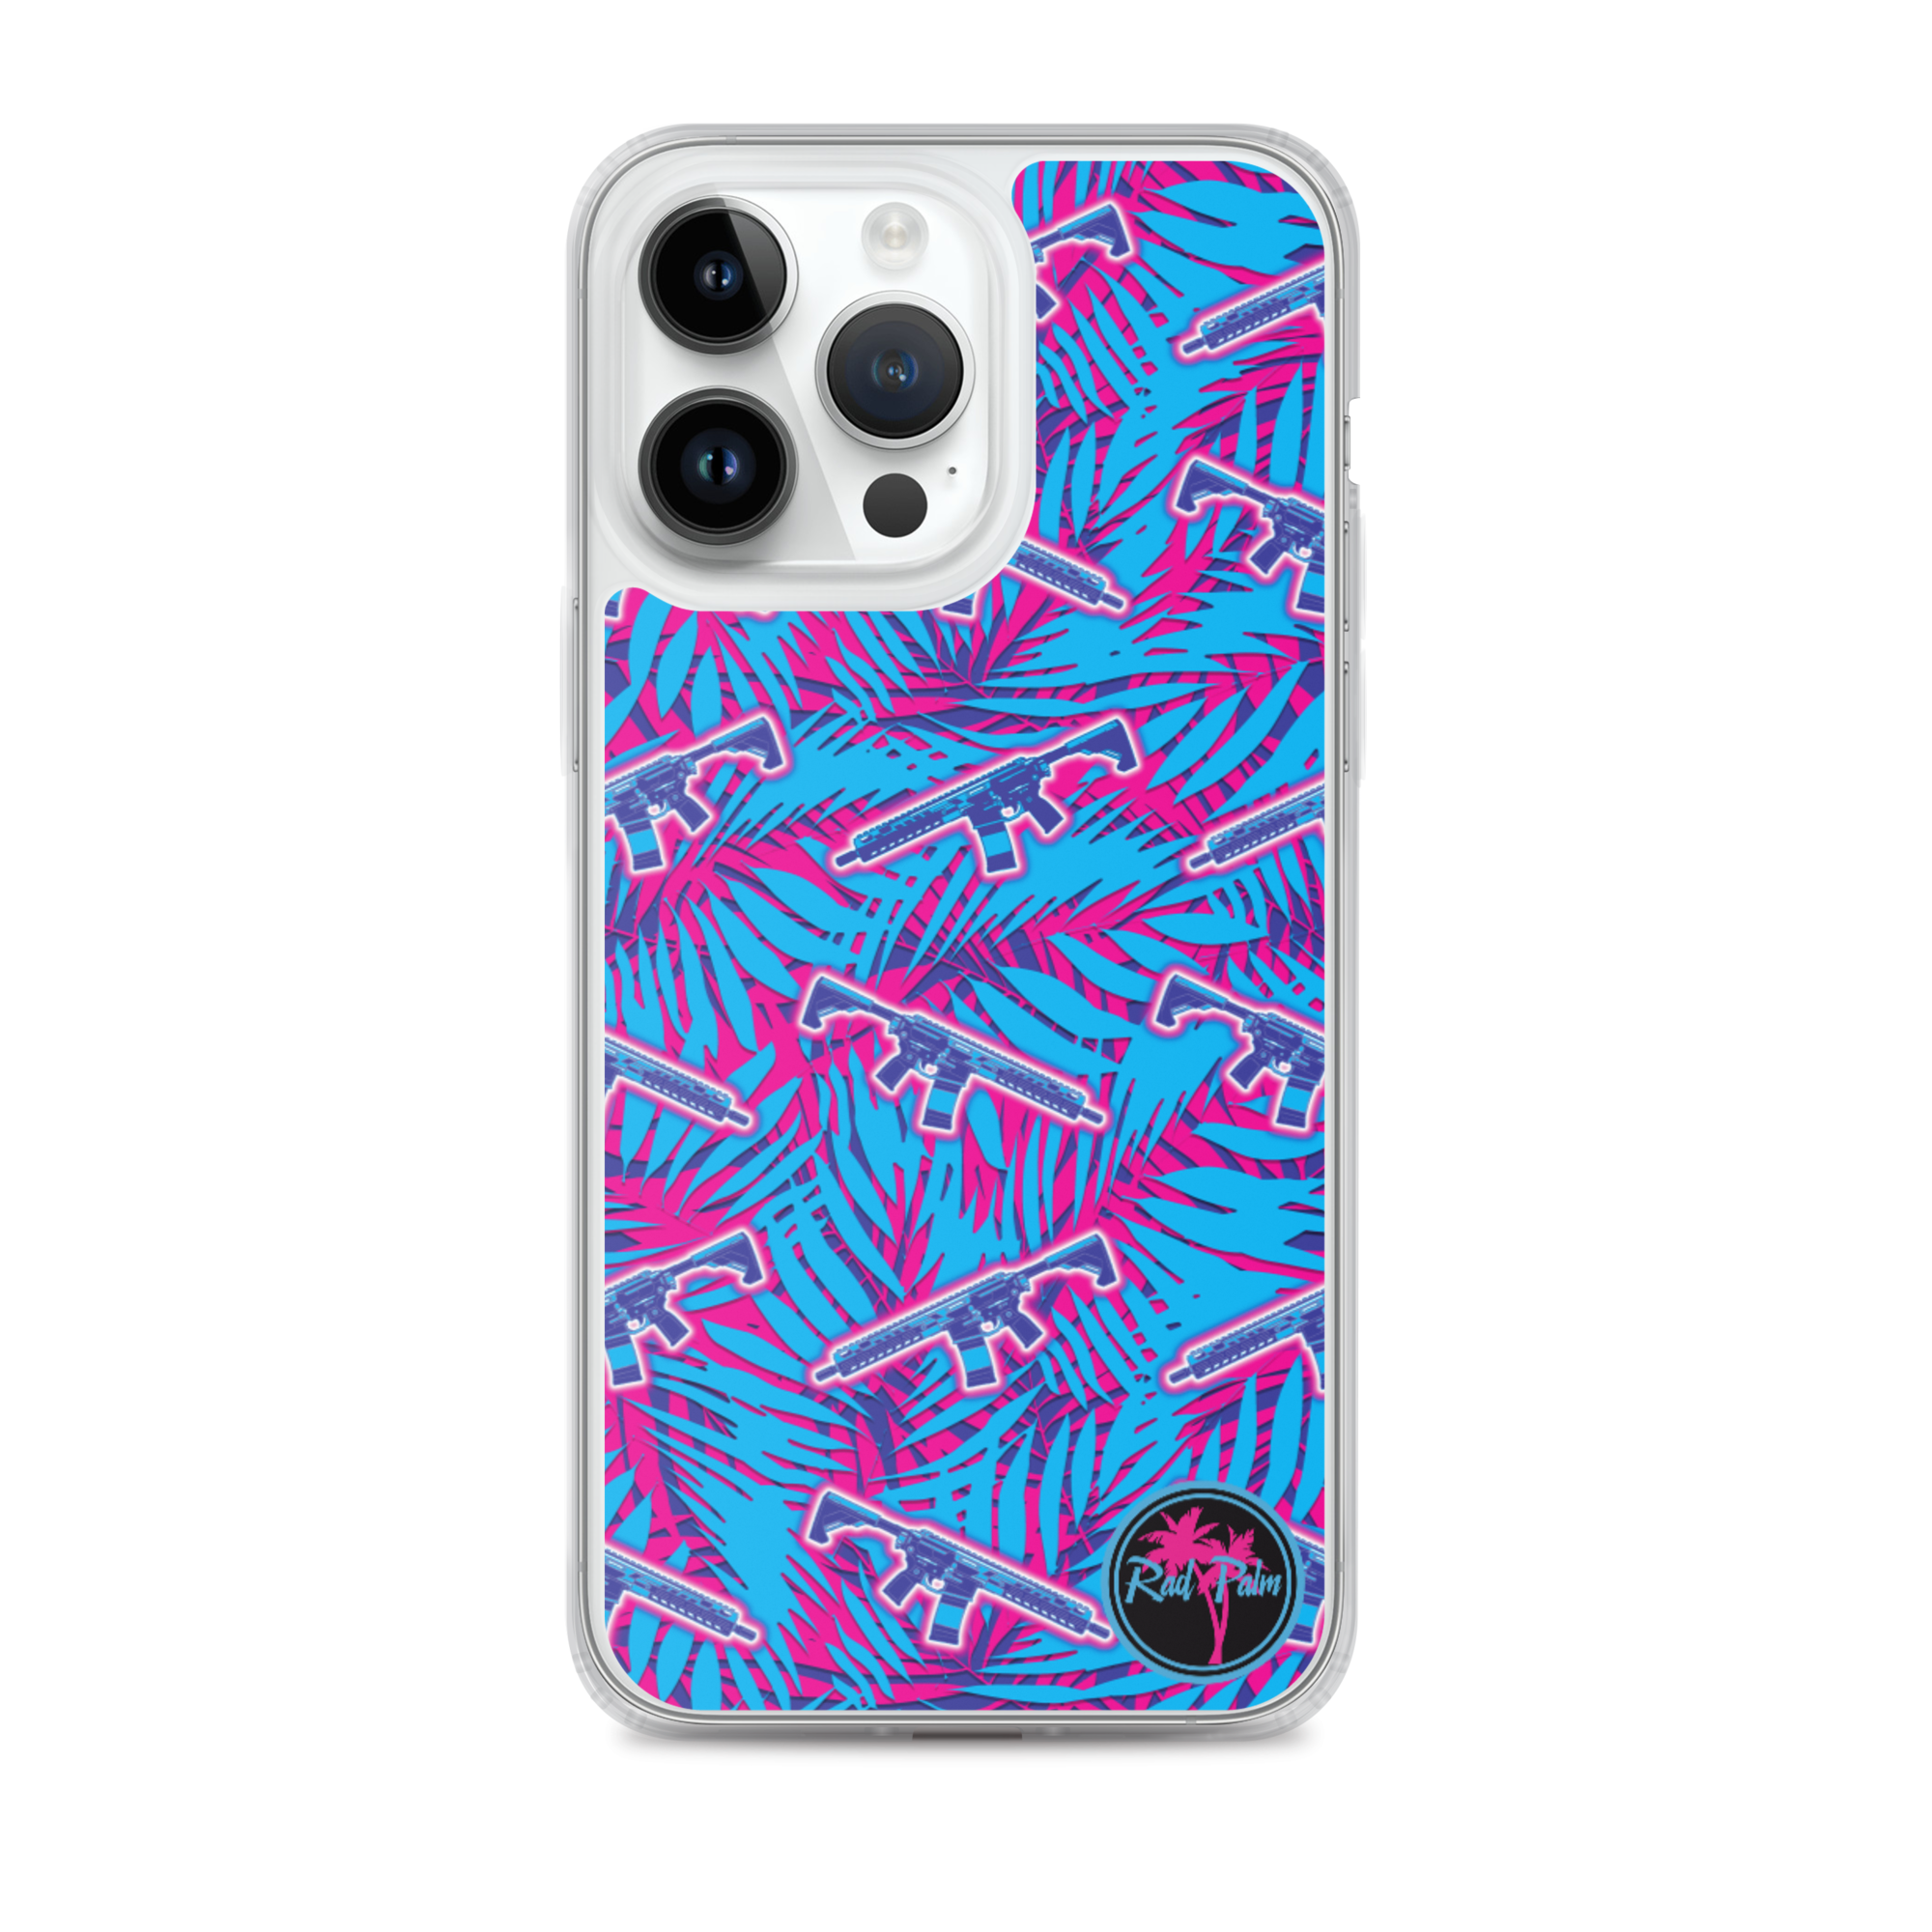 Neon ARs iPhone Case